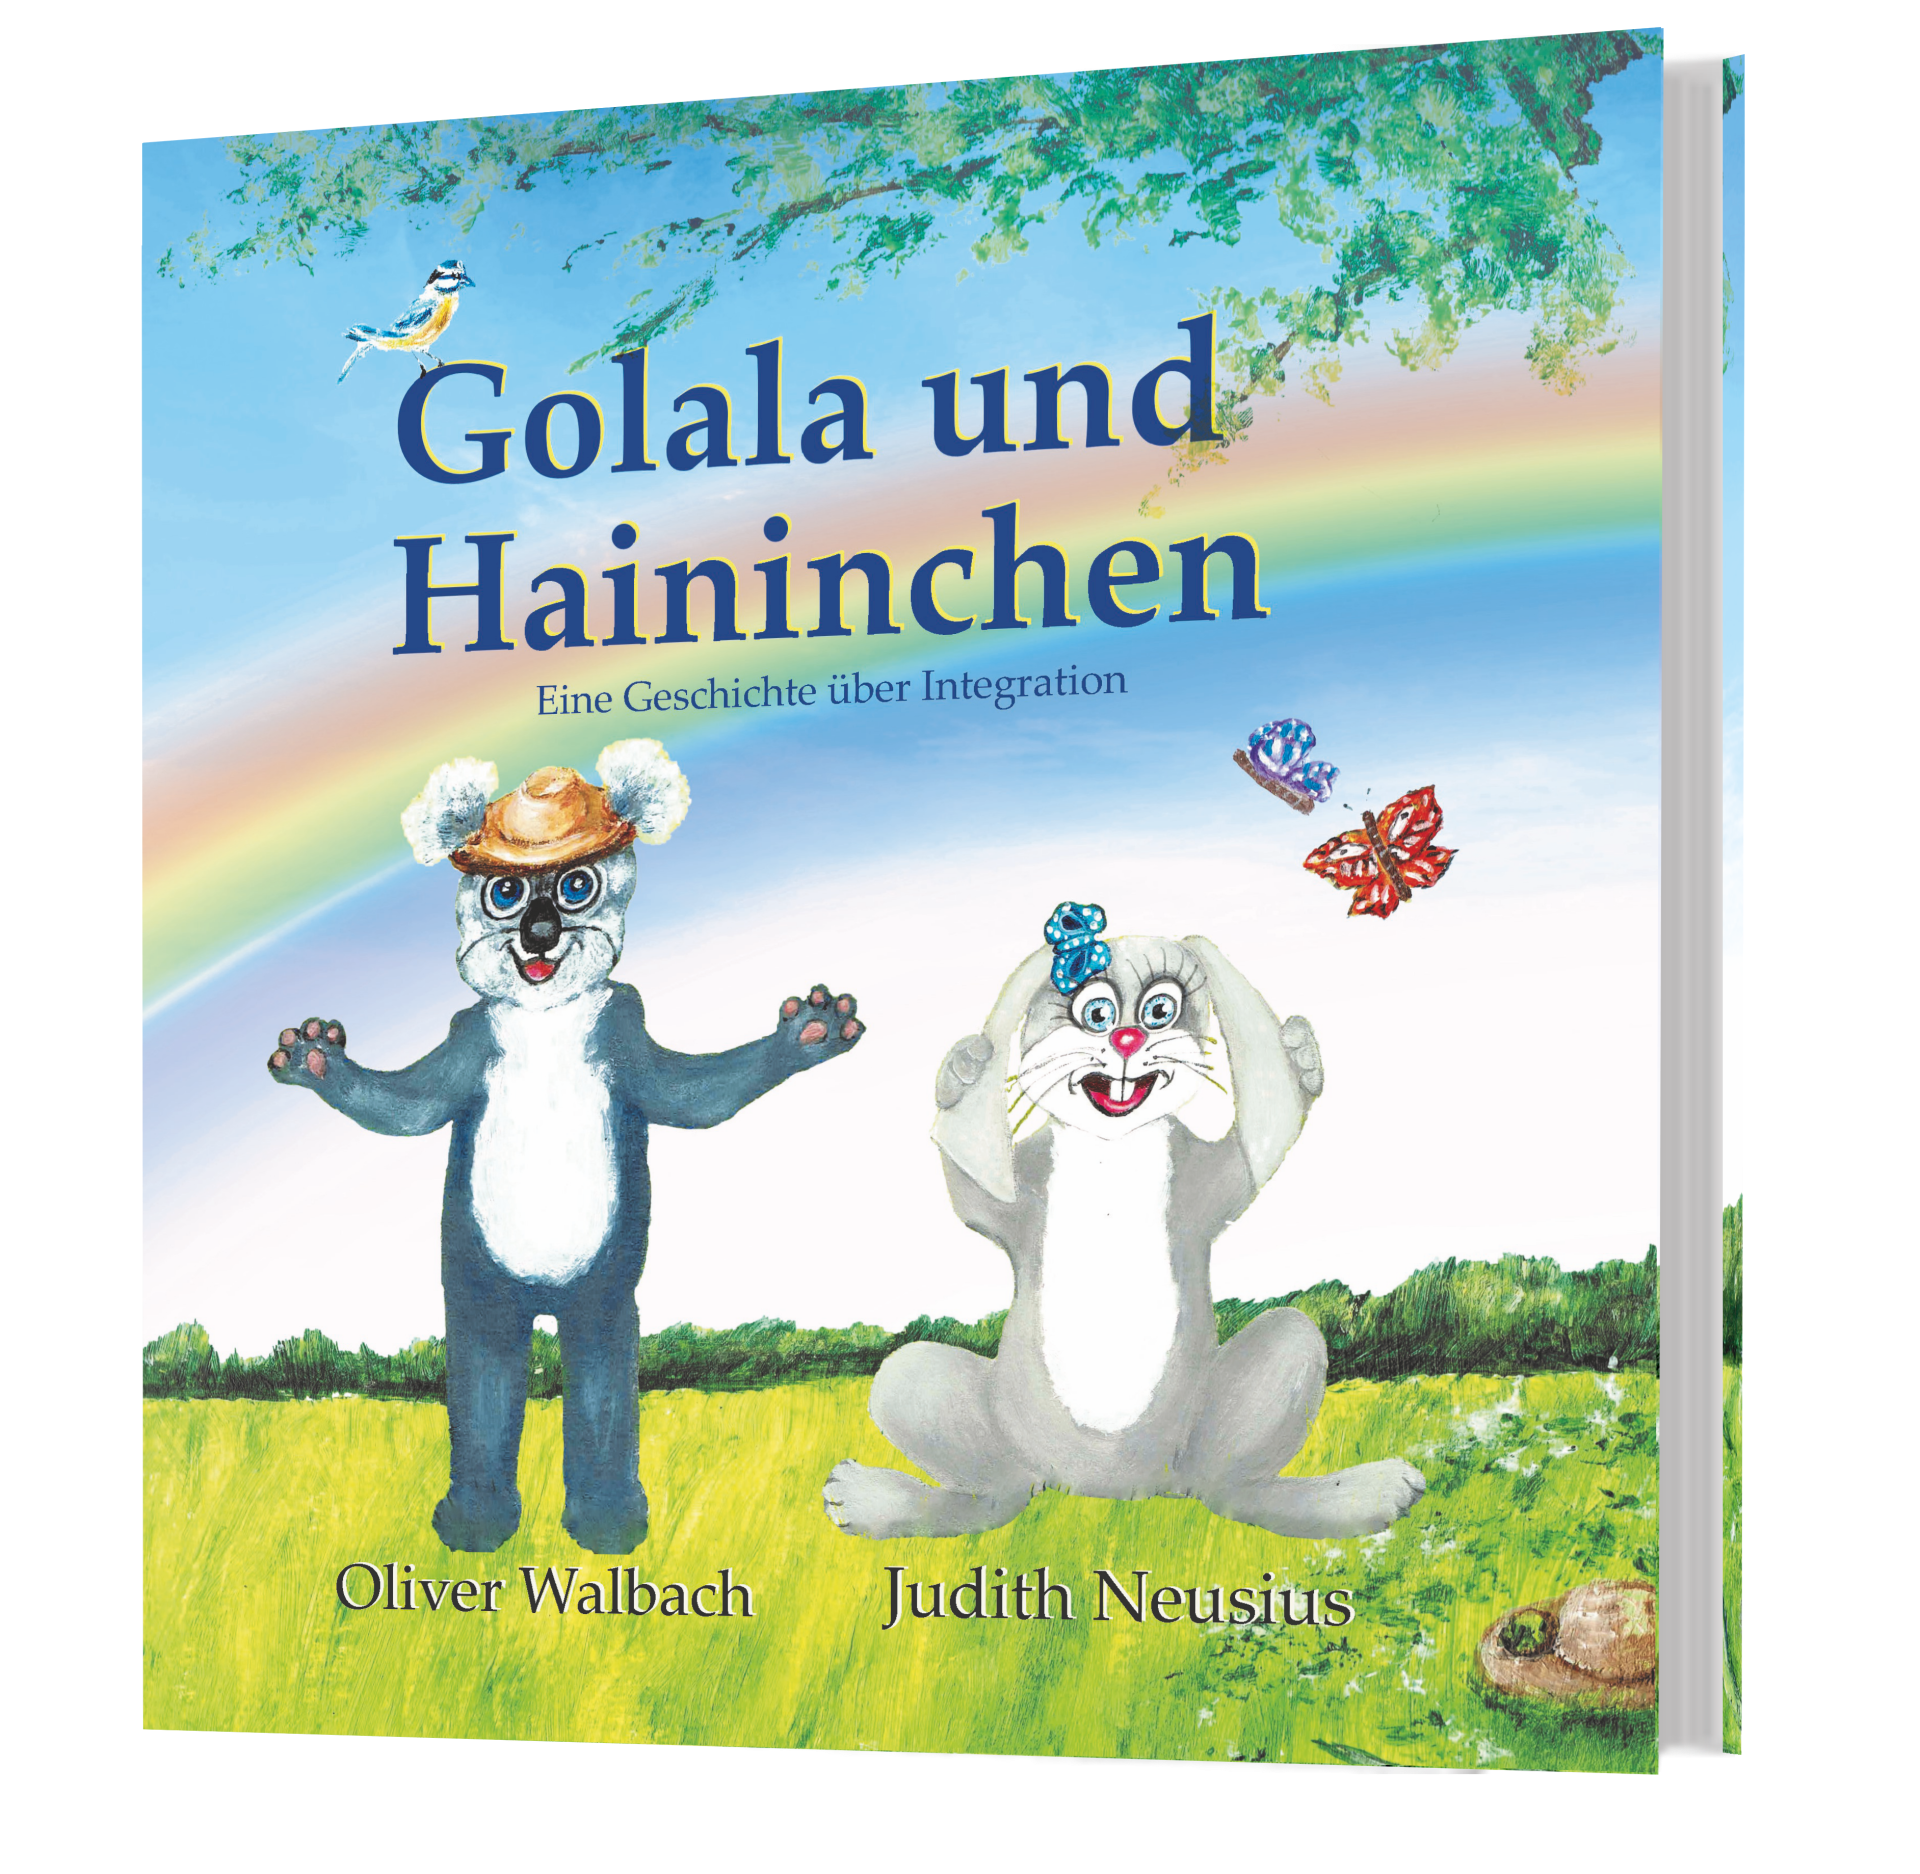 Kinderbuch Golala und Haininchen Integration